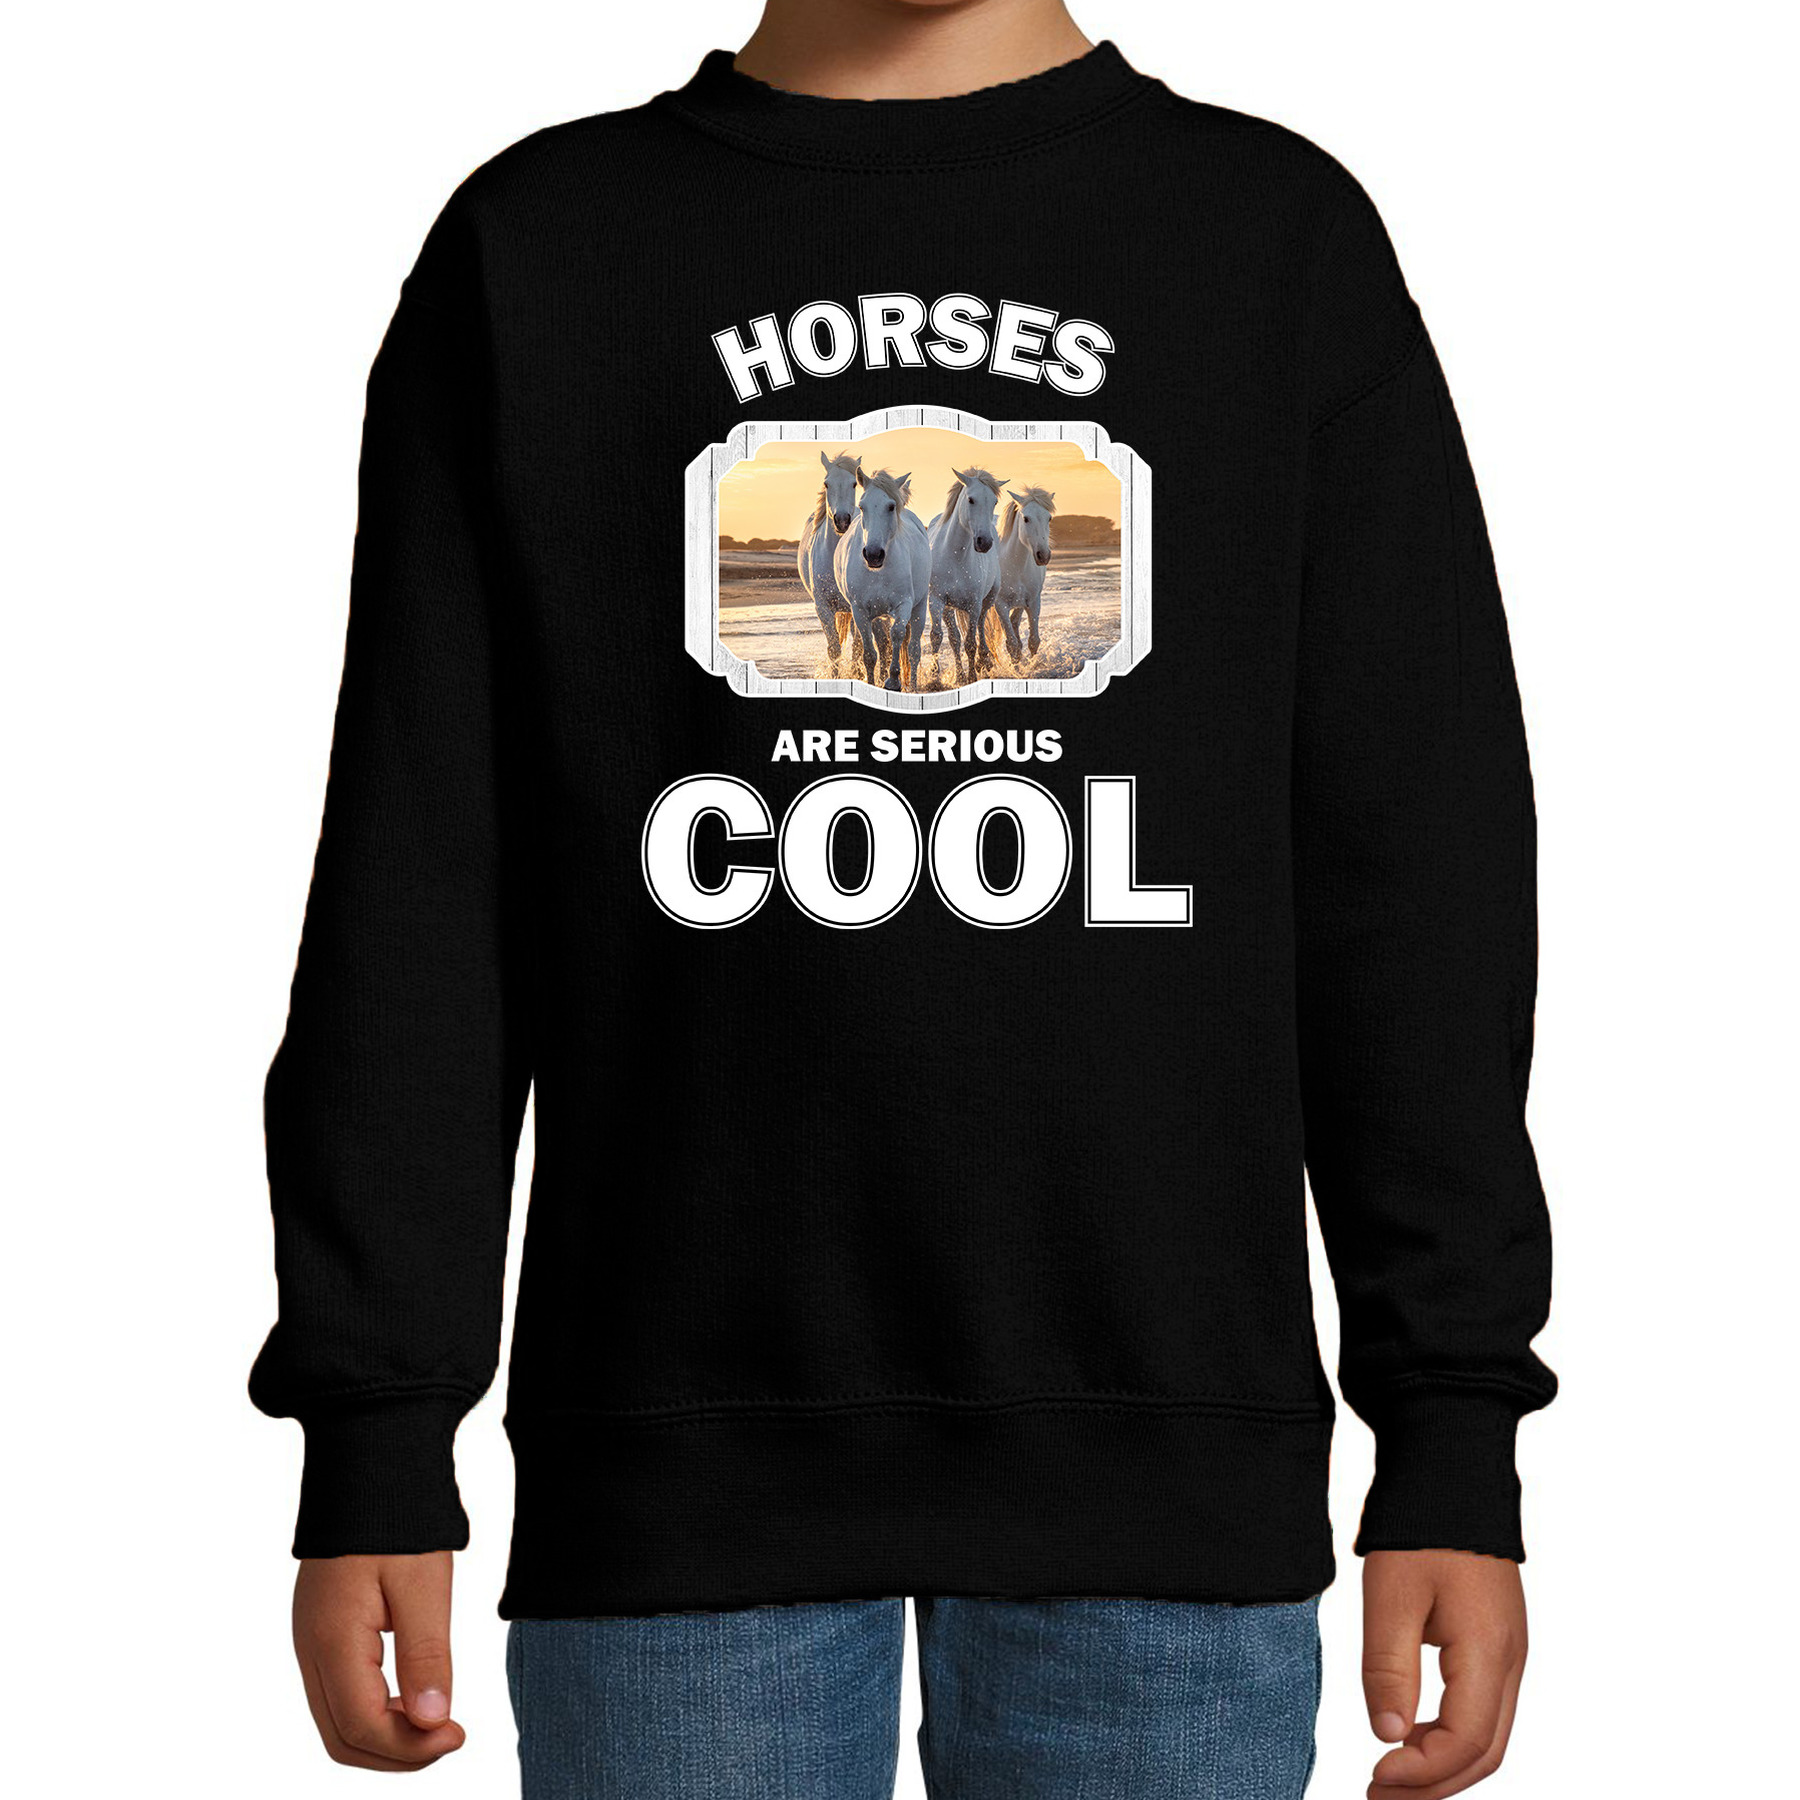 Sweater horses are serious cool zwart kinderen - witte paarden/ wit paard trui